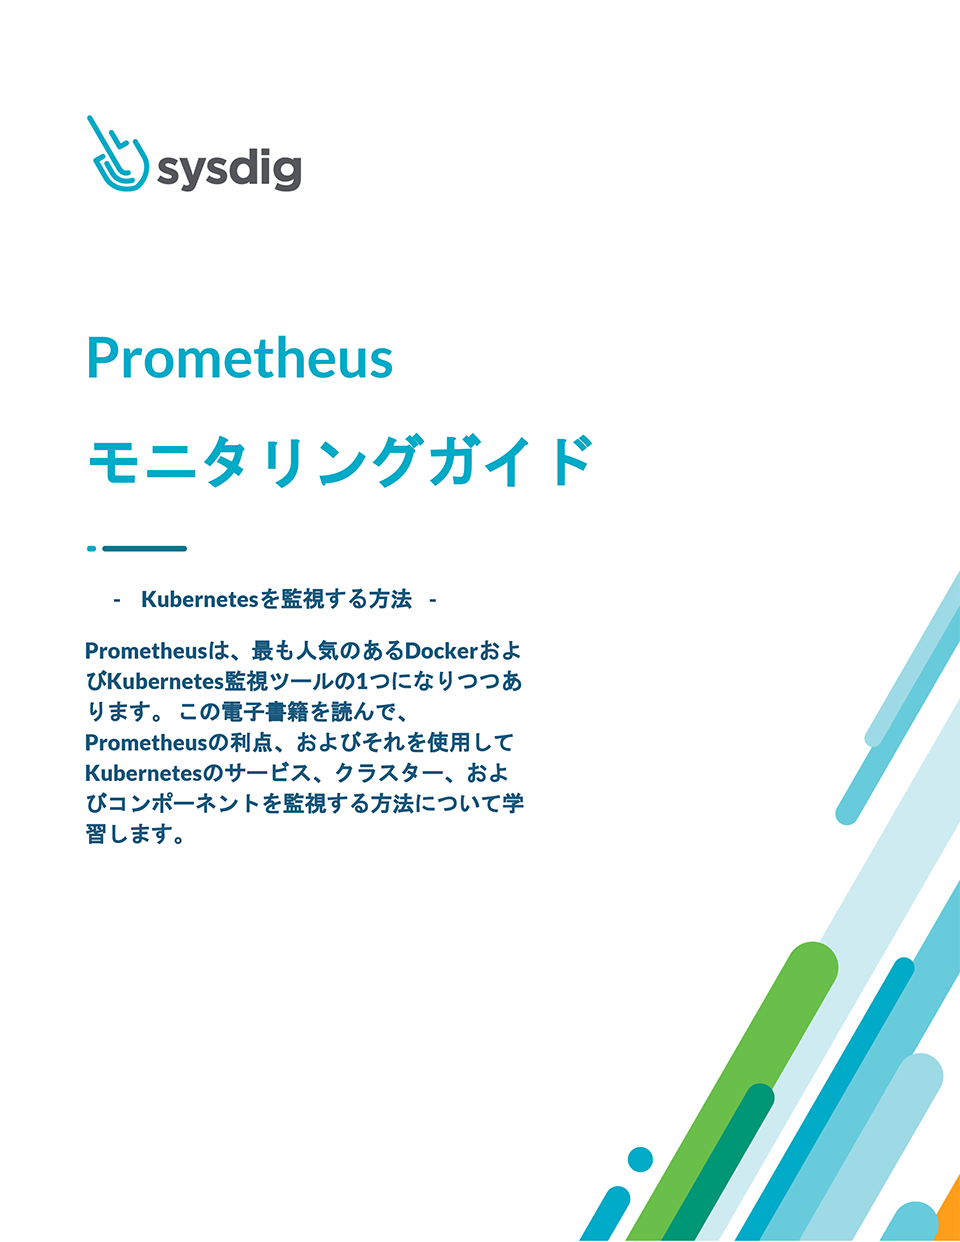 「Prometheusモニタリングガイド」を公開しました